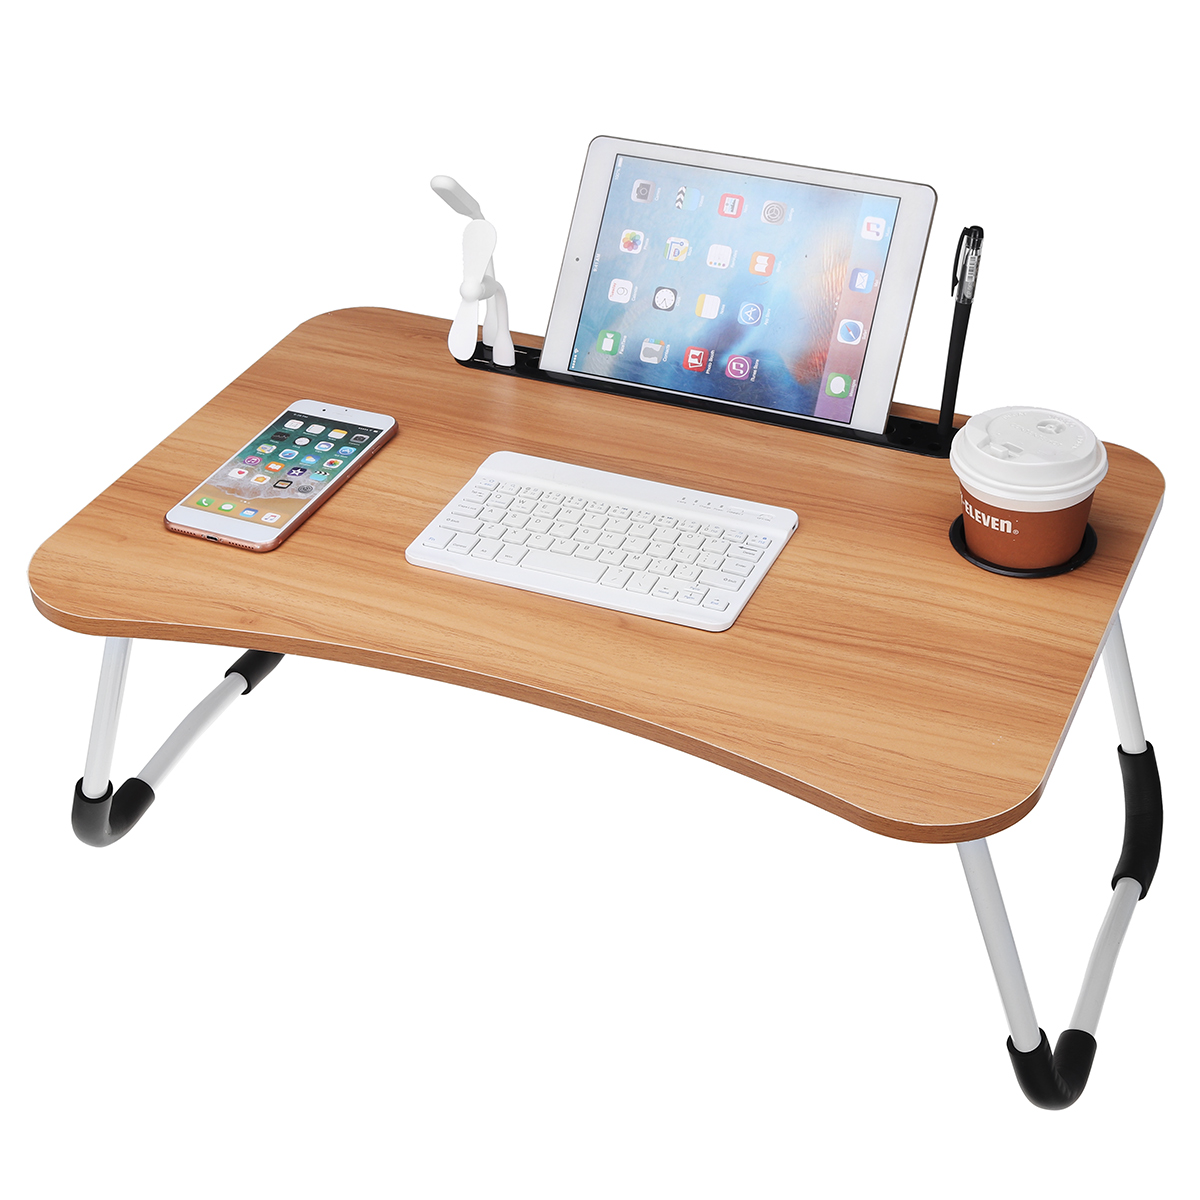 USB-Computer-Desk-Multifunctional-Portable-Bed-Computer-Desk-Lazy-Foldable-Lazy-Laptop-Table-for-Hom-1776388-22